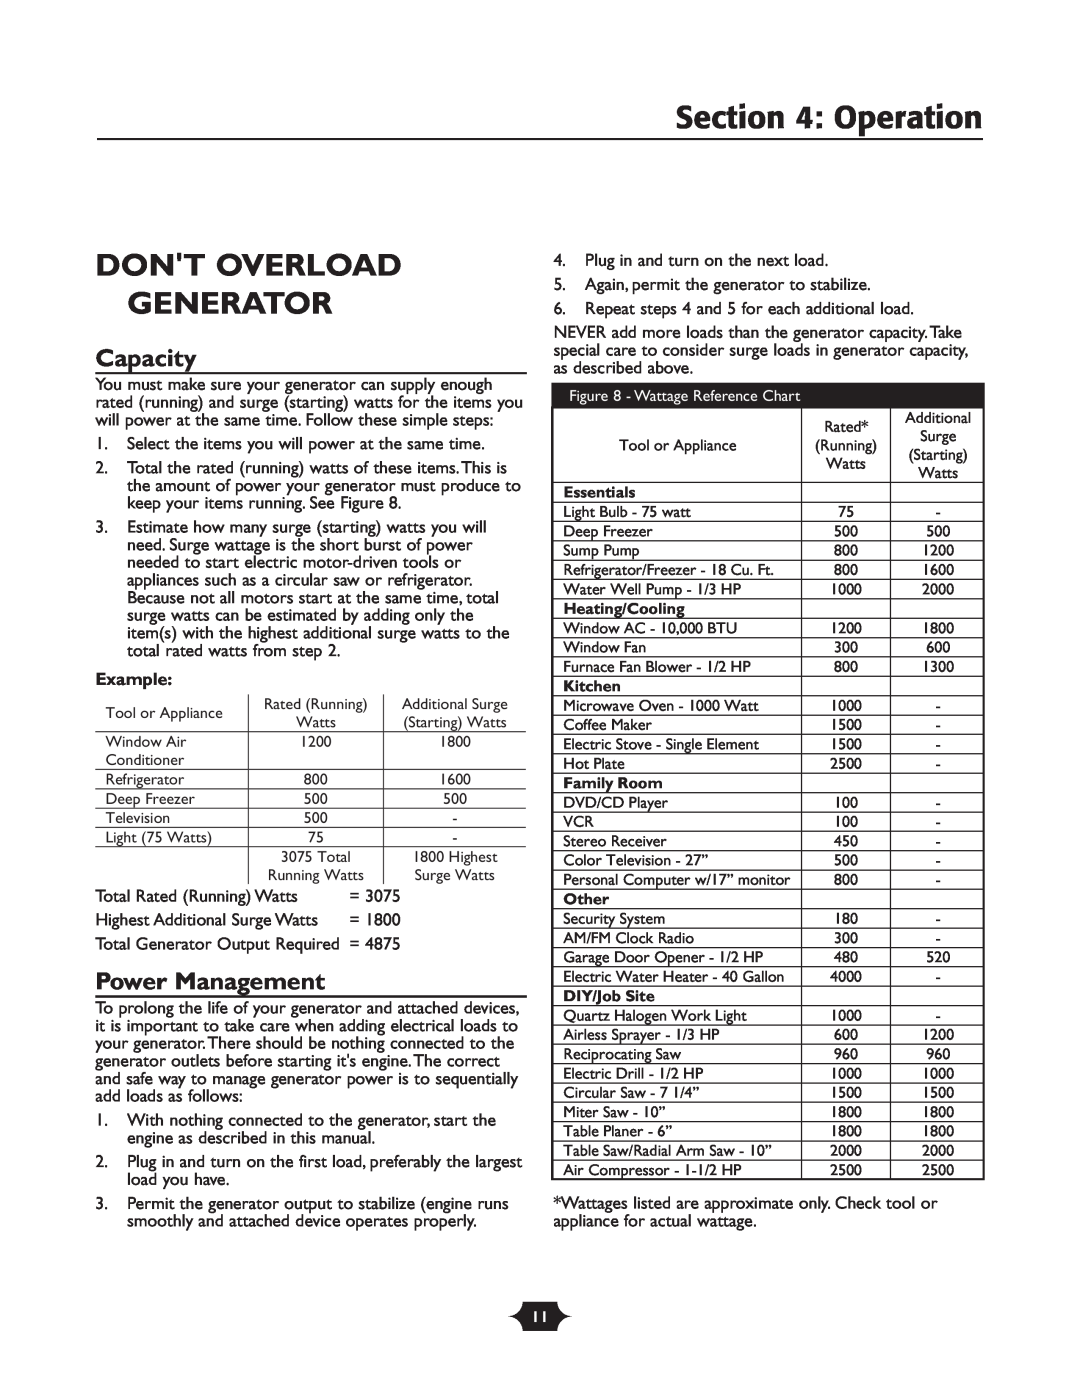 Troy-Bilt 030245 manual Dont Overload Generator, Capacity, Power Management, Operation 